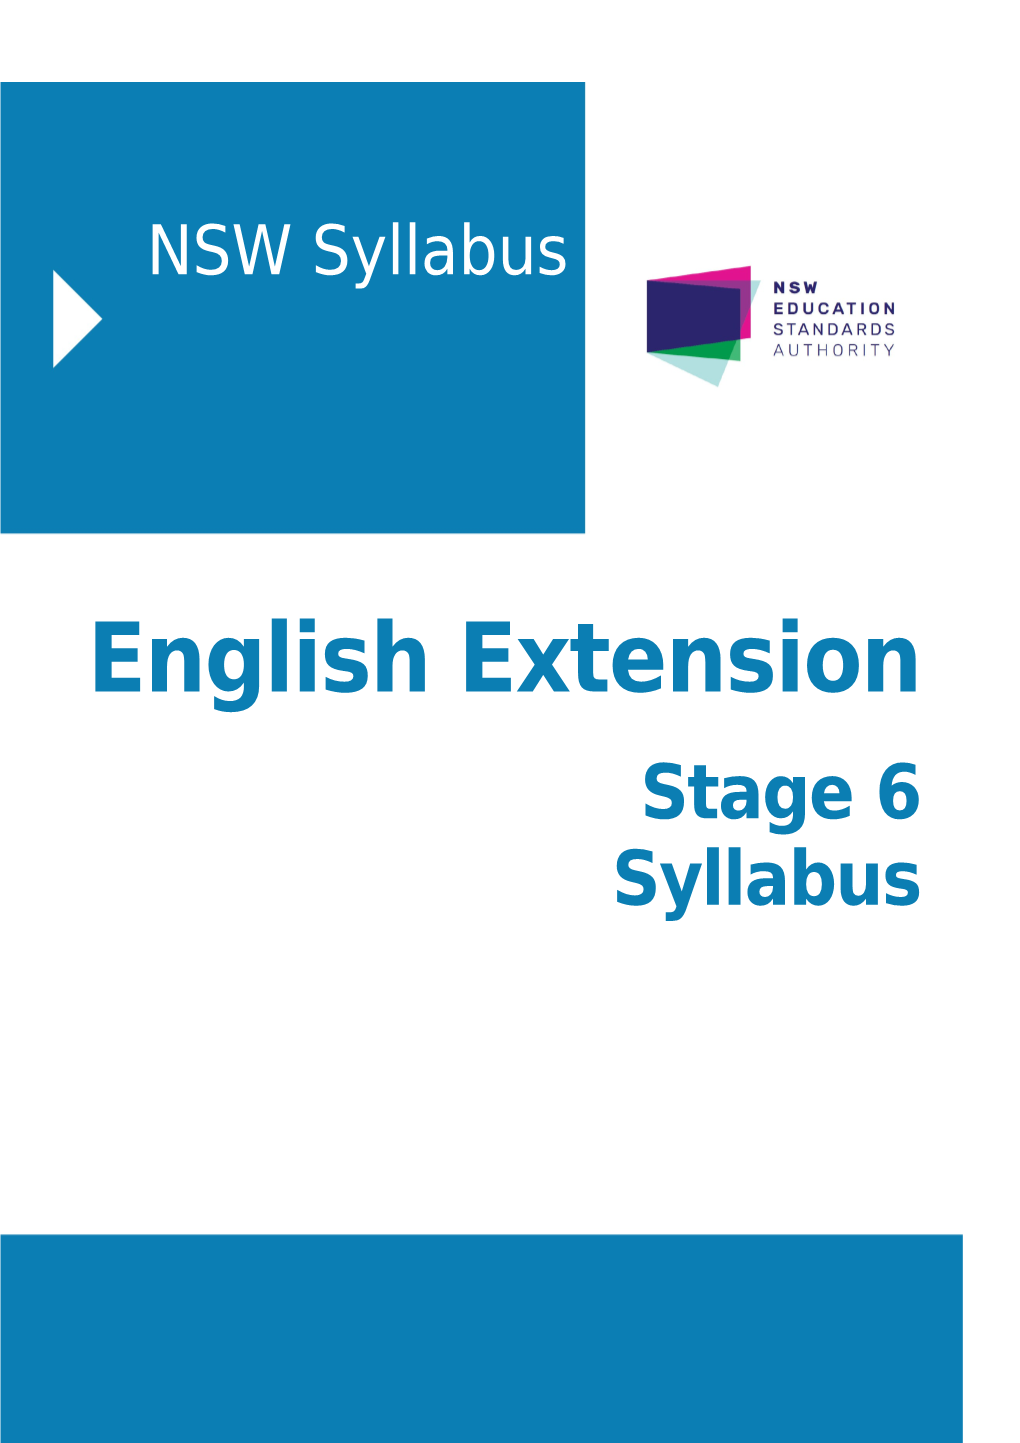 English Extension Stage 6 Syllabus 2017